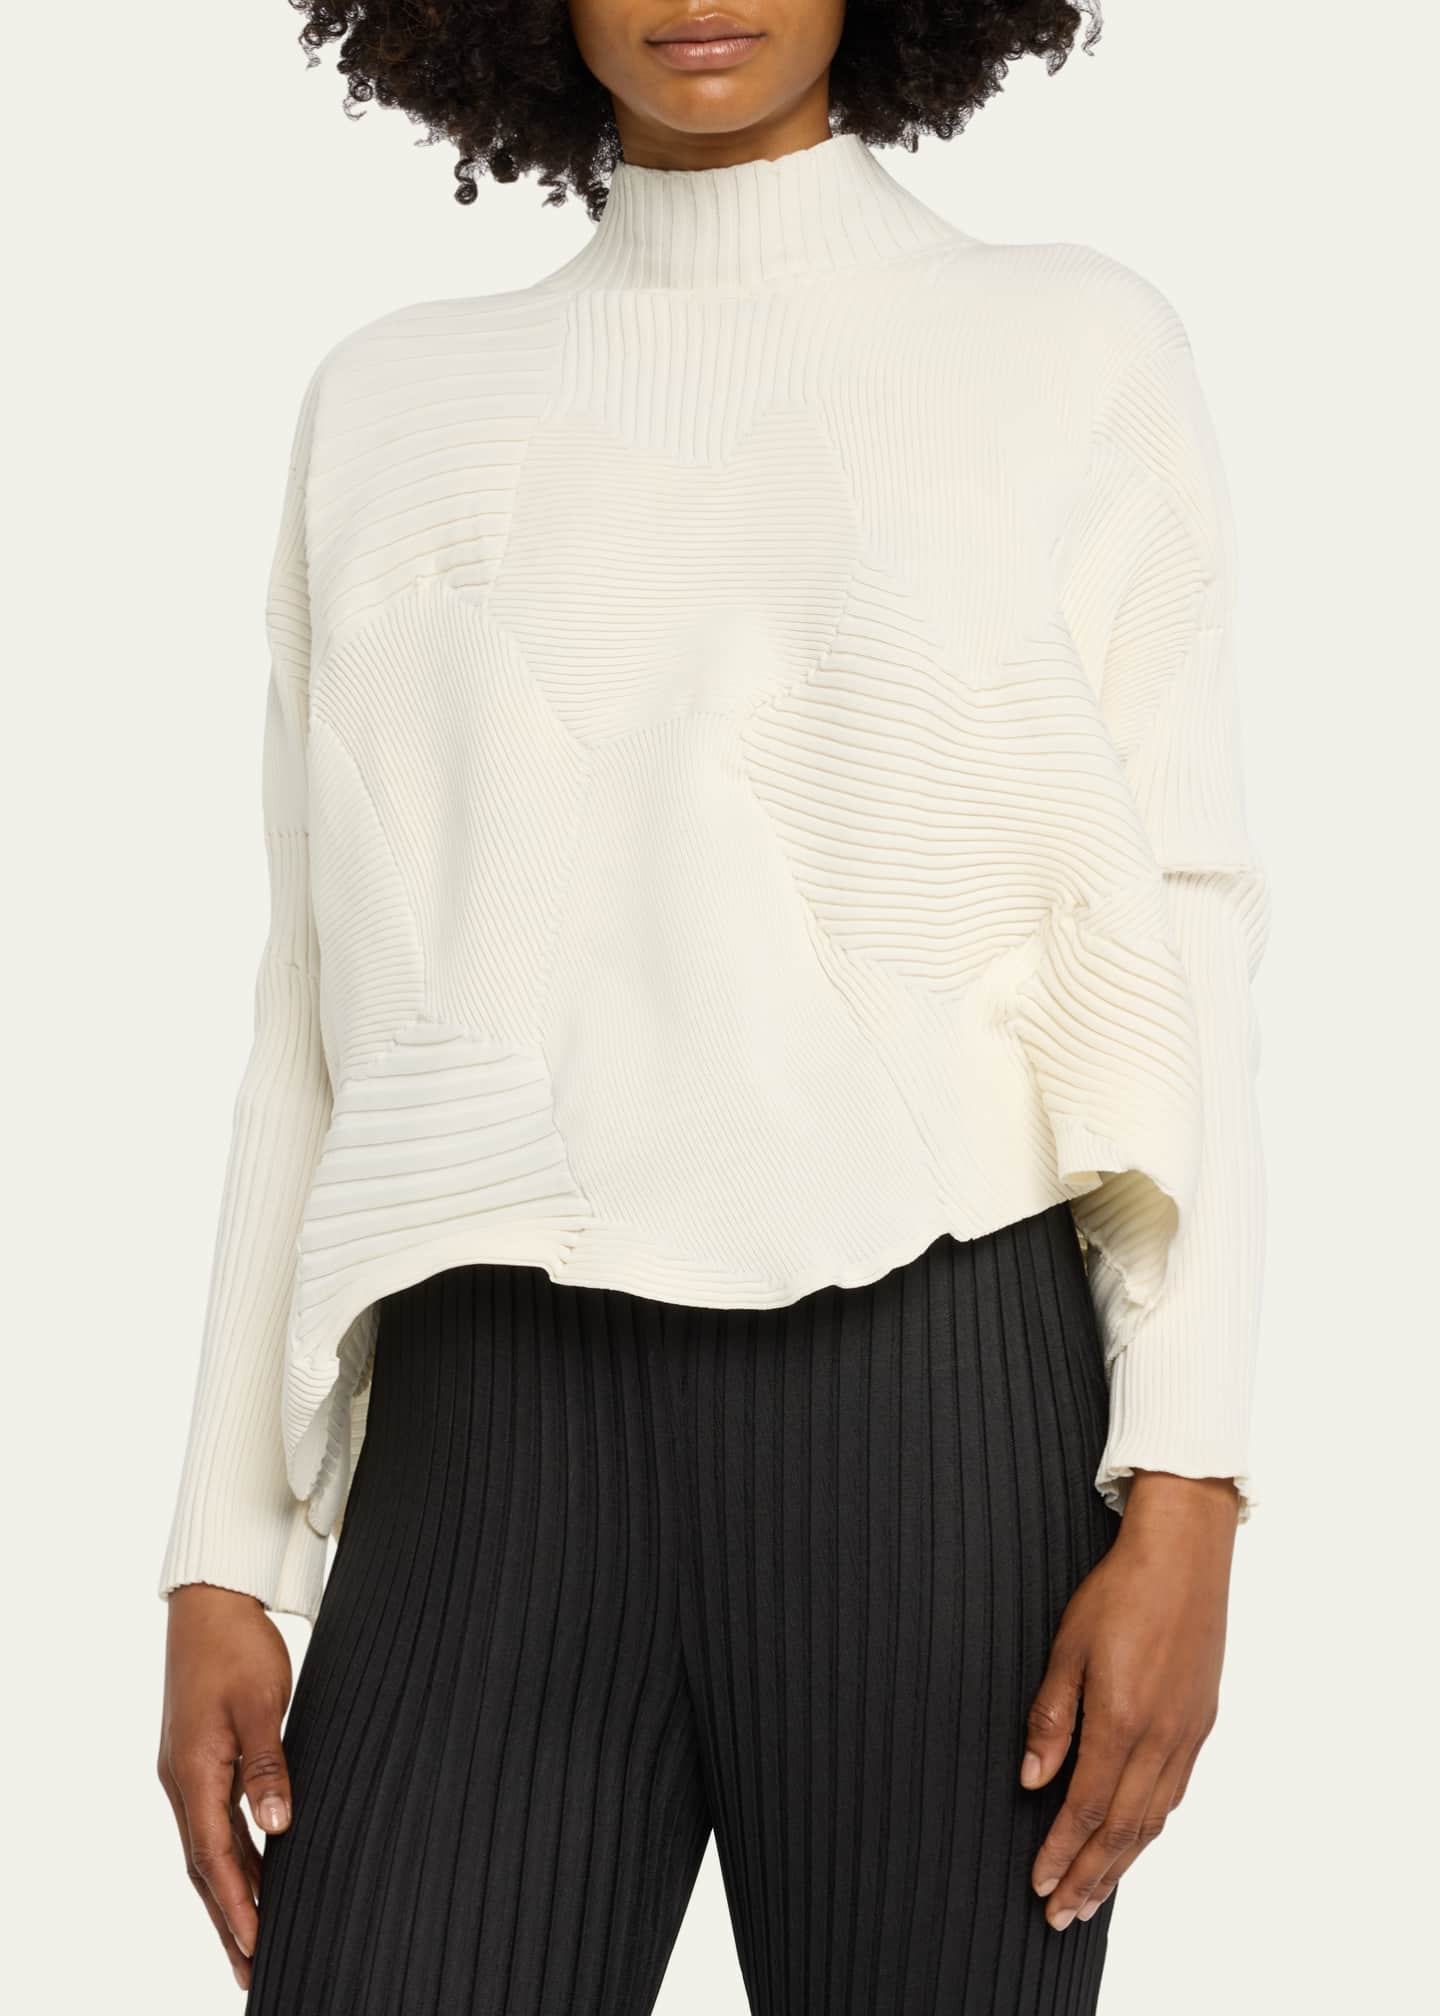 Issey Miyake Kone Kone Asymmetric Knit Sweater - Bergdorf Goodman